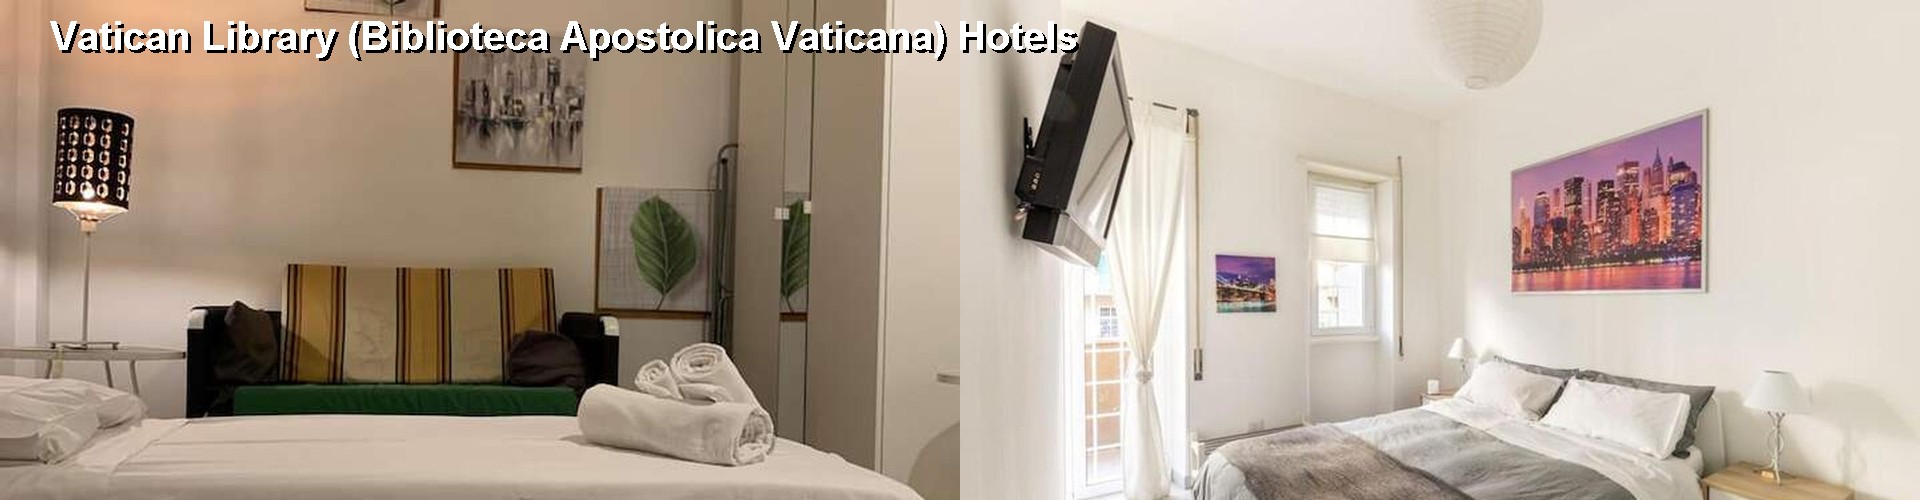 5 Best Hotels near Vatican Library (Biblioteca Apostolica Vaticana)